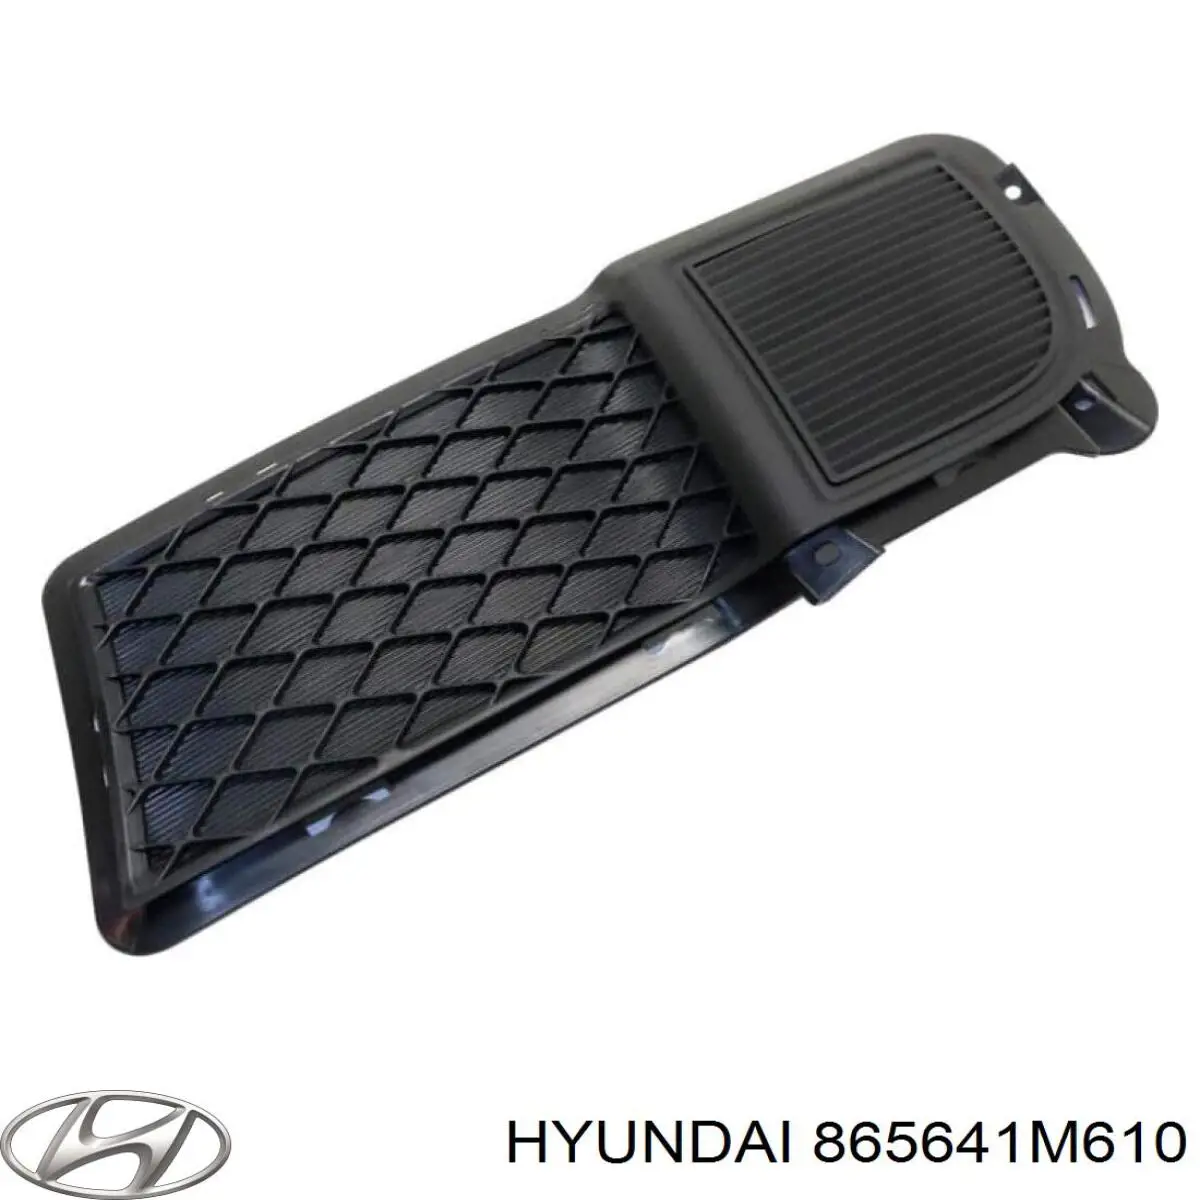 865641M610 Hyundai/Kia ободок (окантовка фары противотуманной)